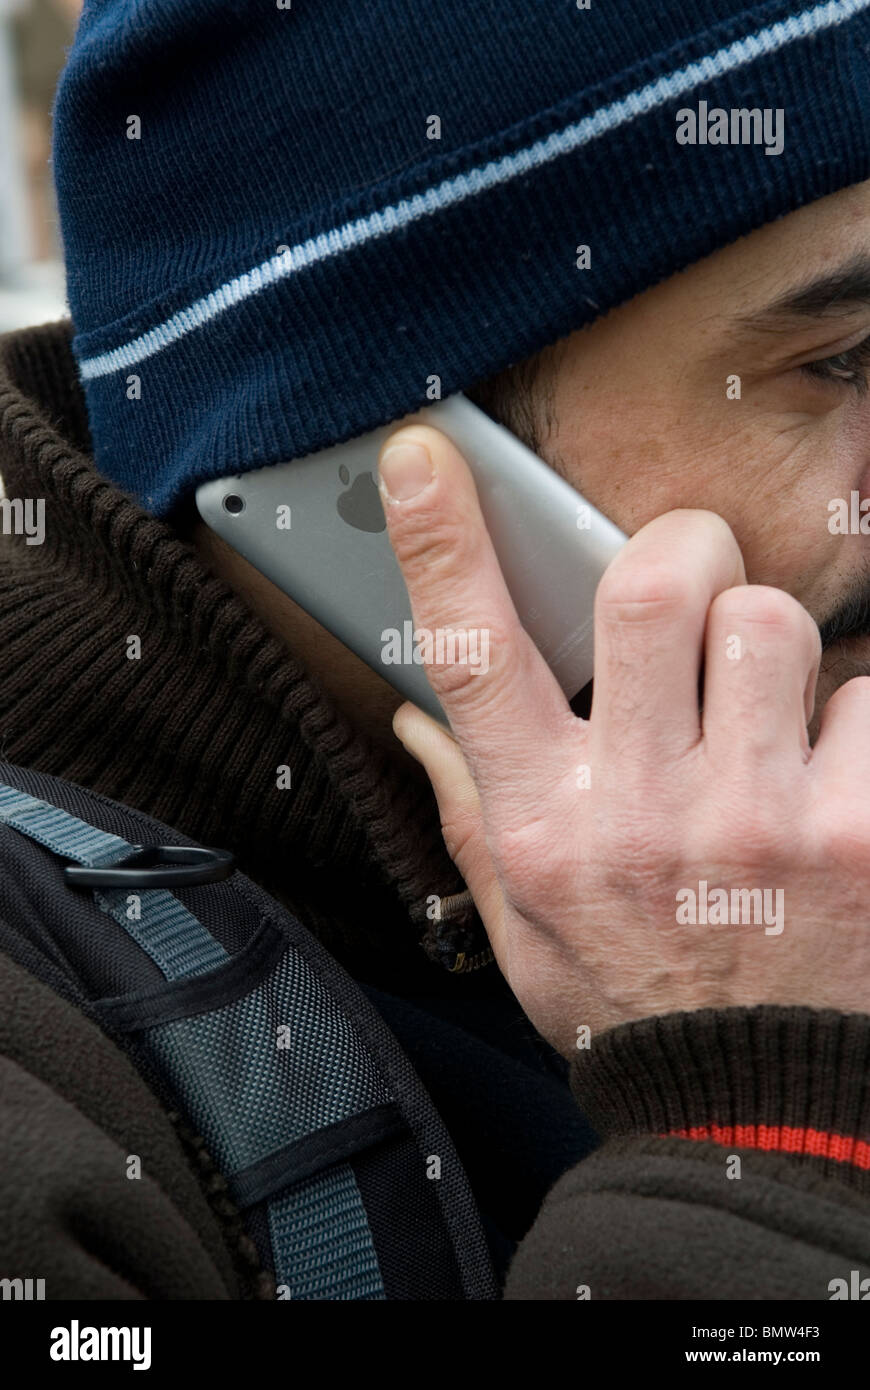 Man using Iphone mobile phone Stock Photo